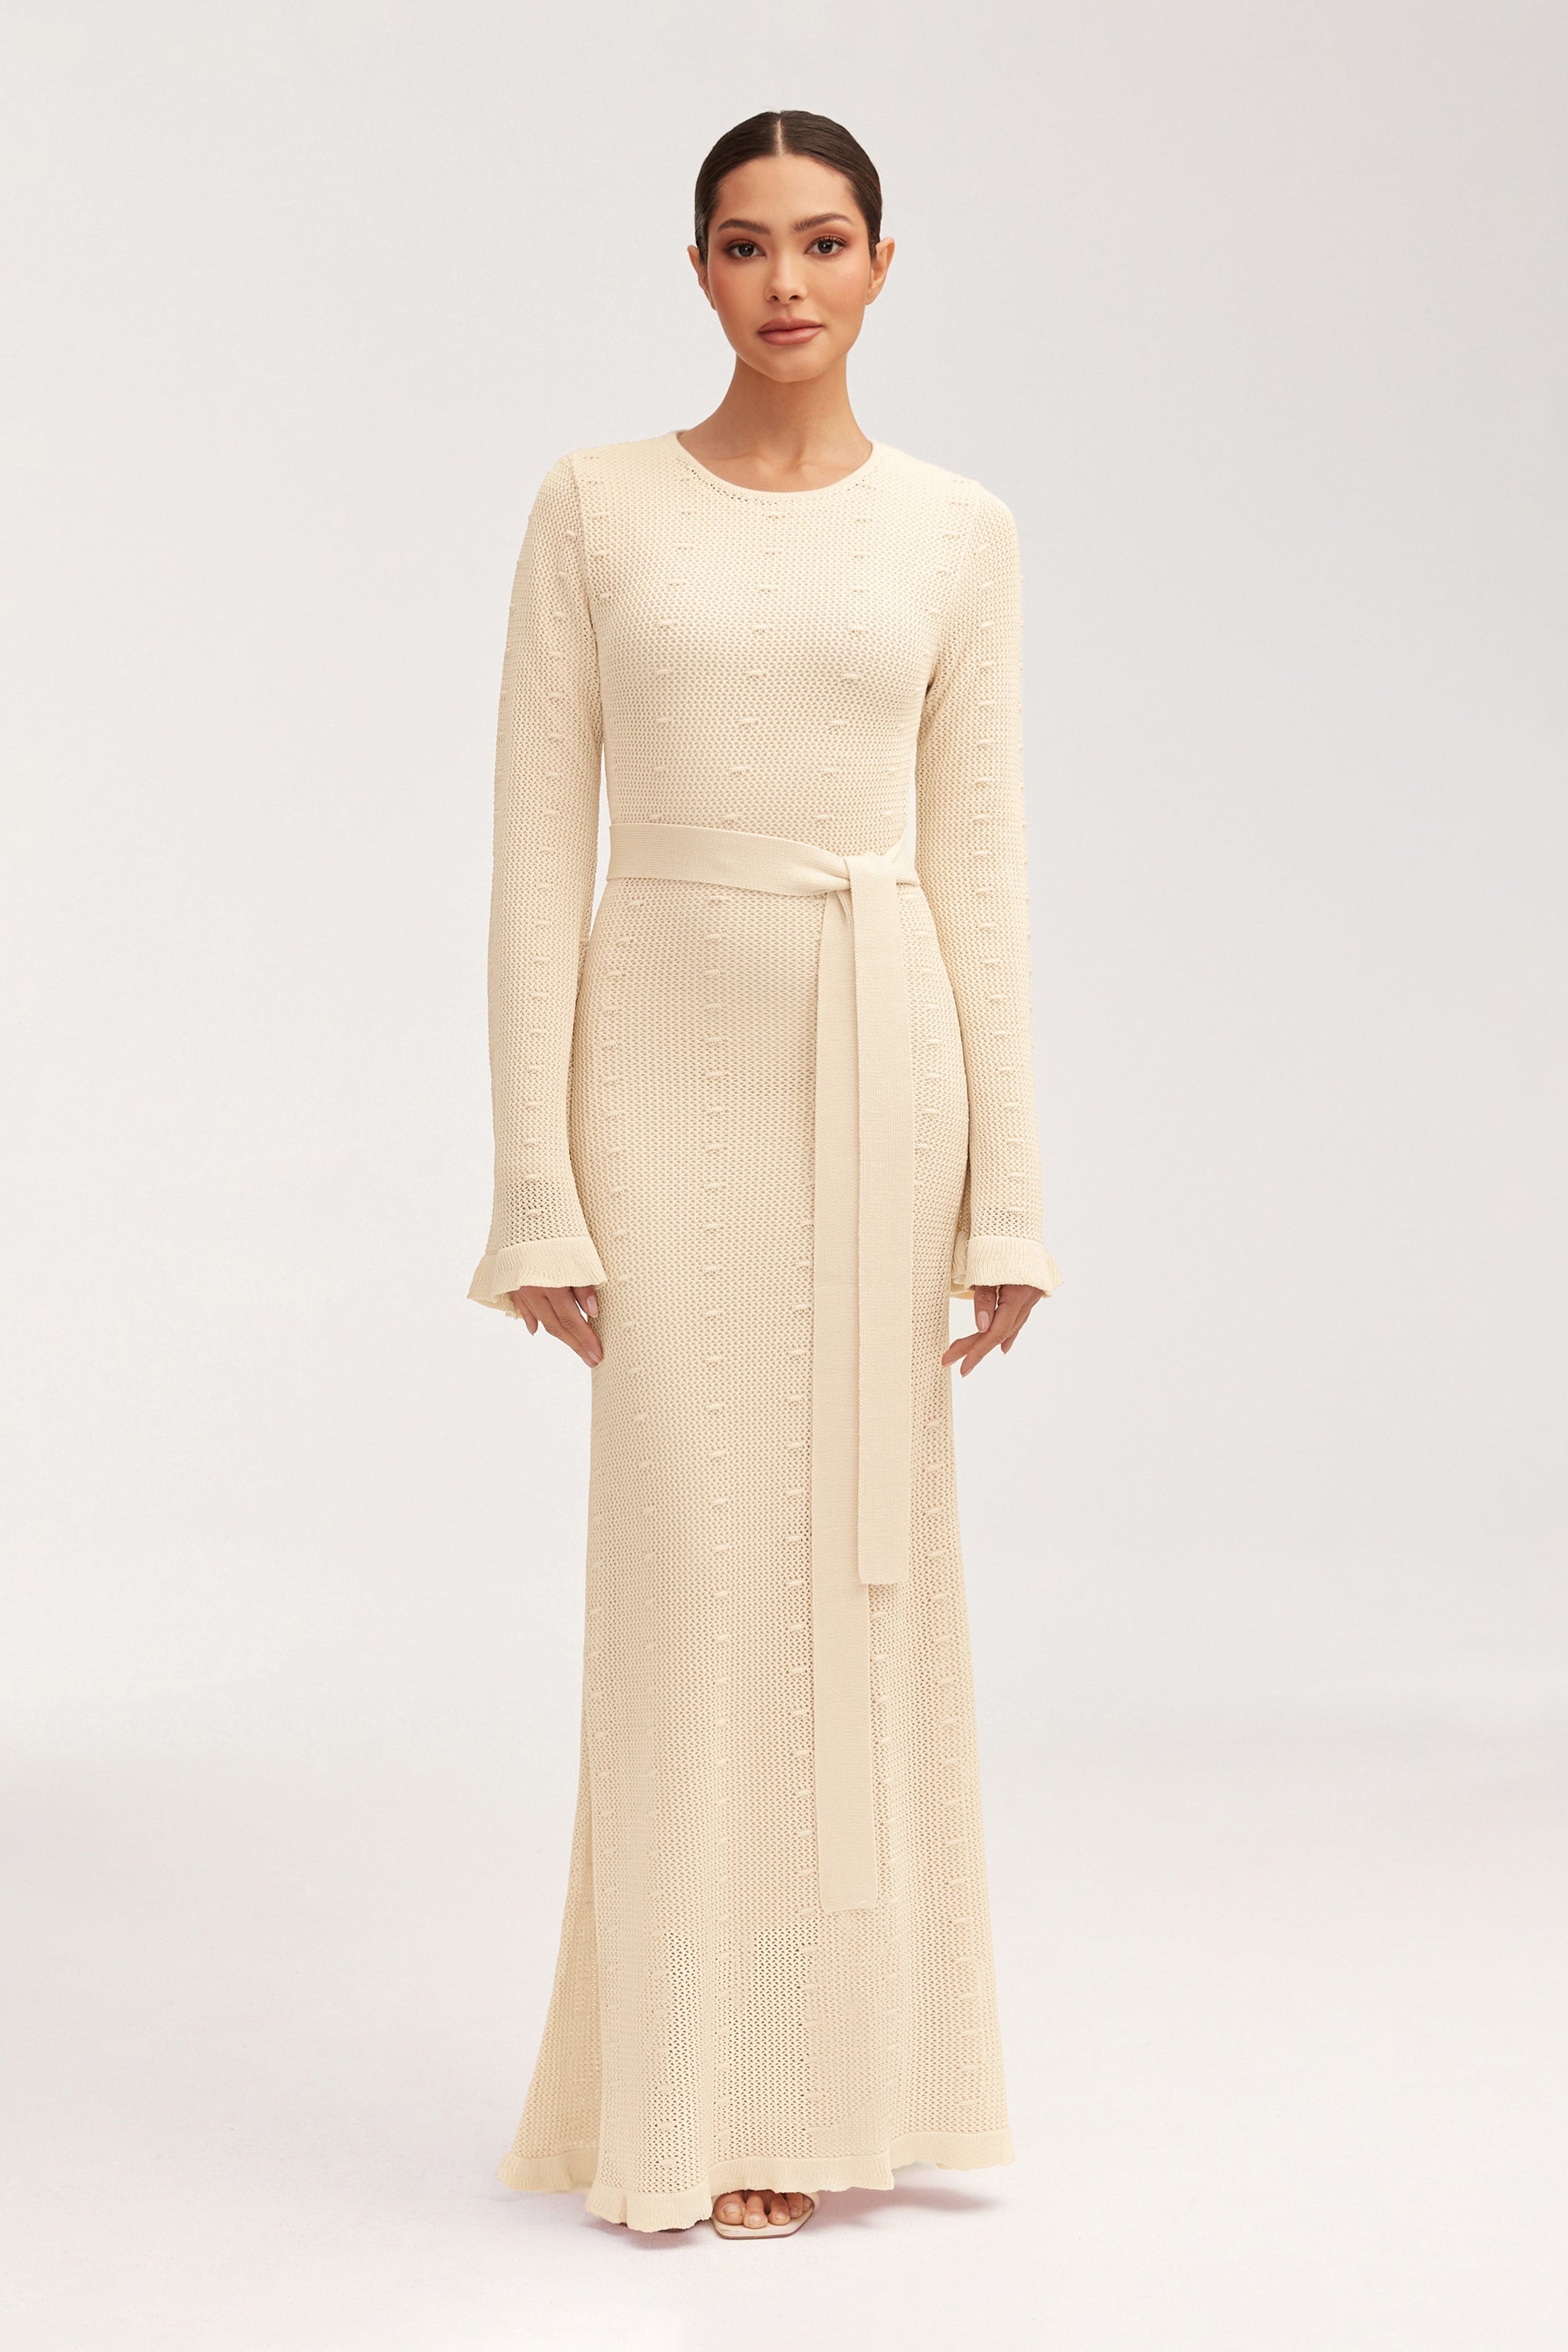 Leilani Crochet Maxi Dress - Off White Clothing Veiled 